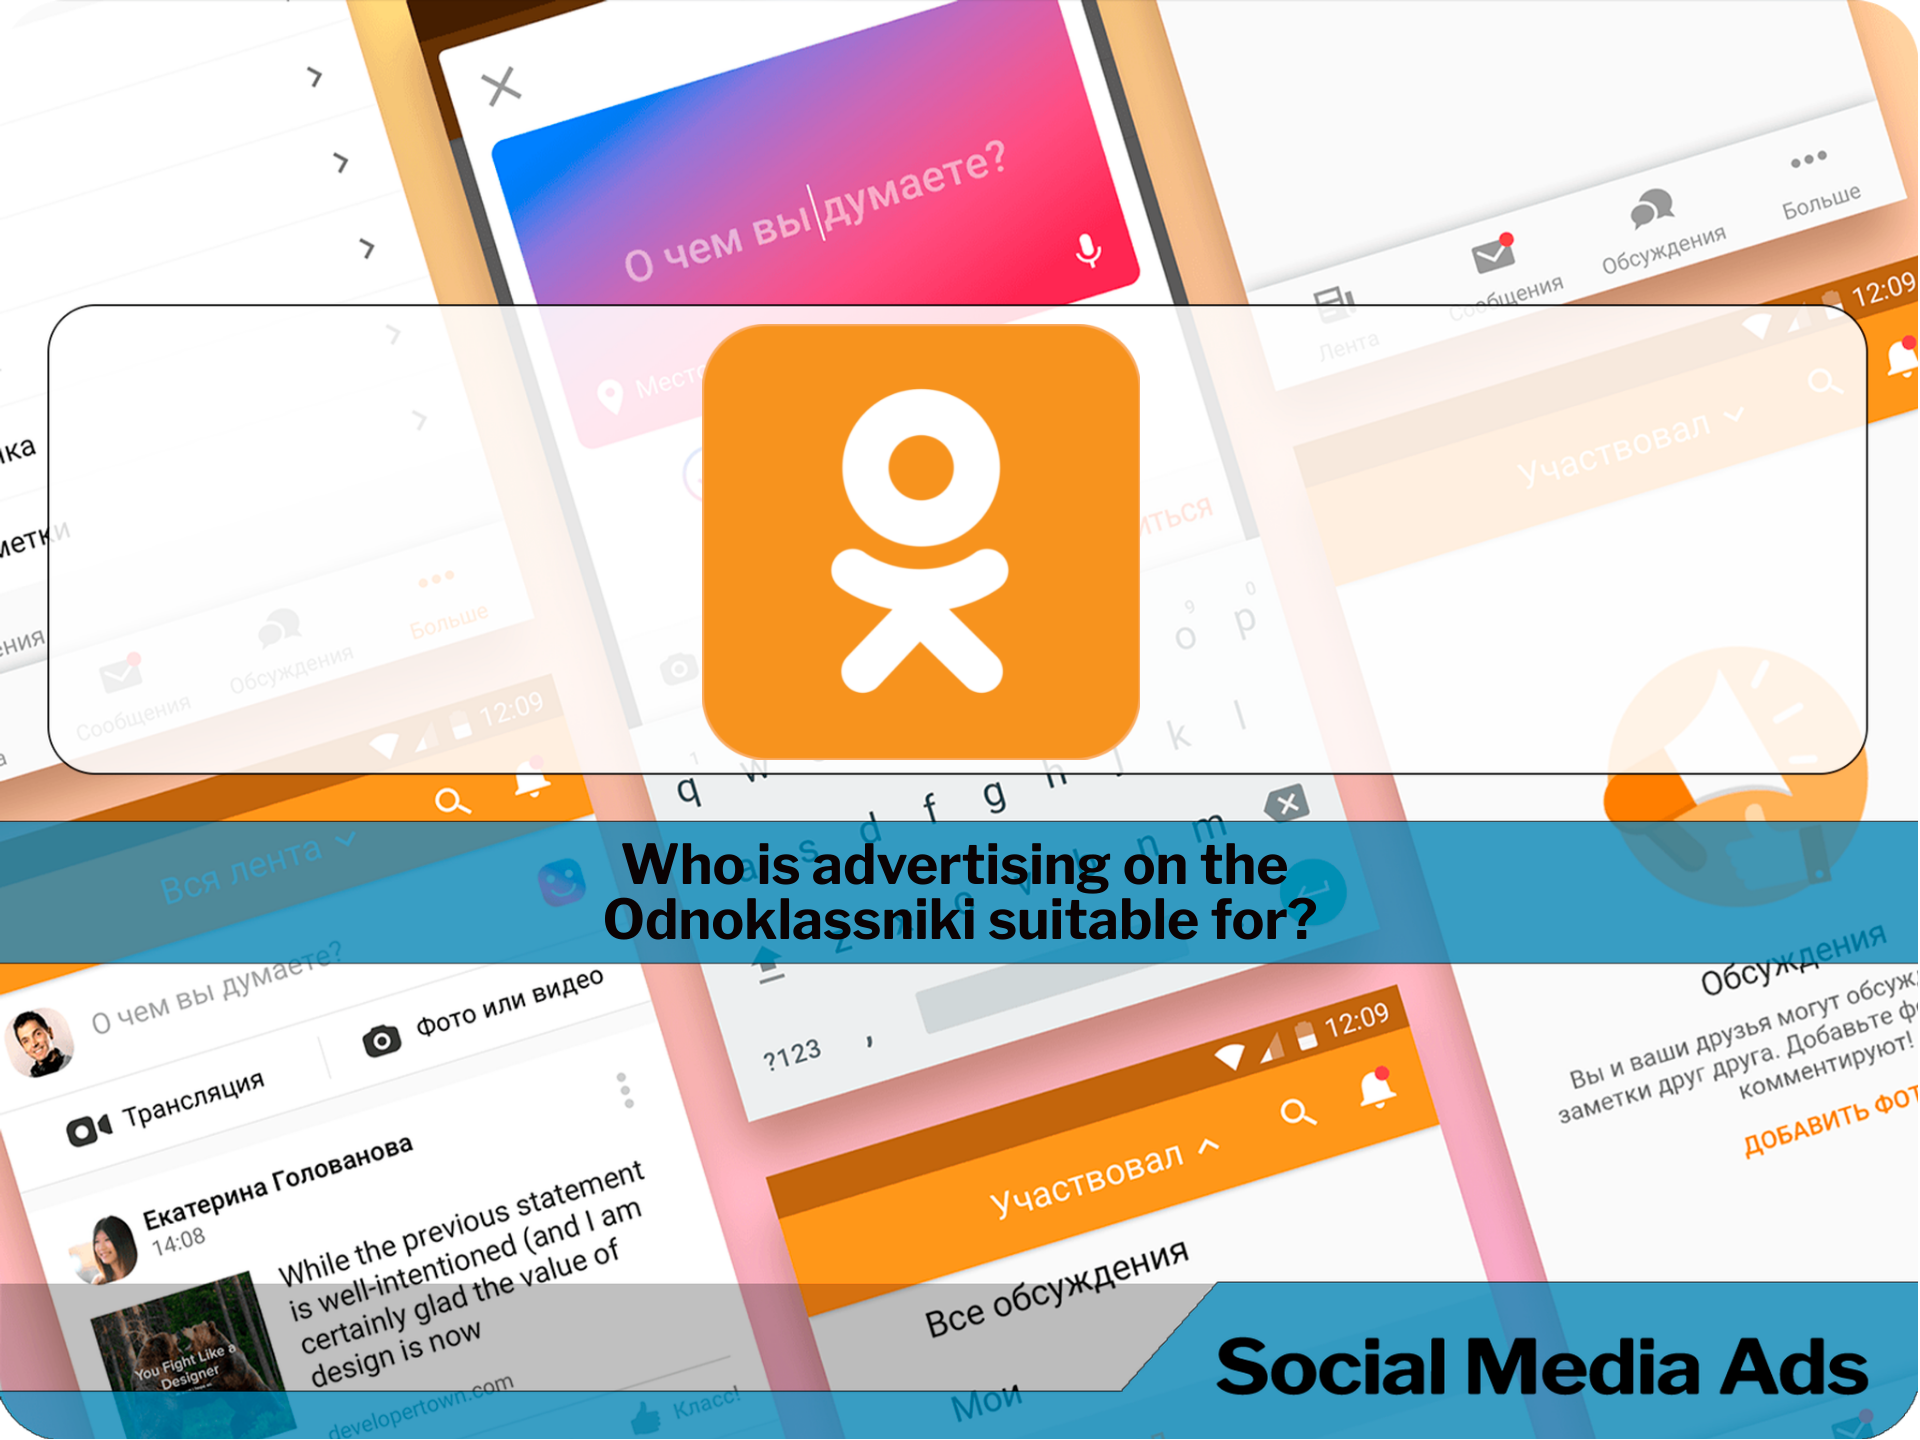 Who is advertising on the Odnoklassniki social network suitable for?